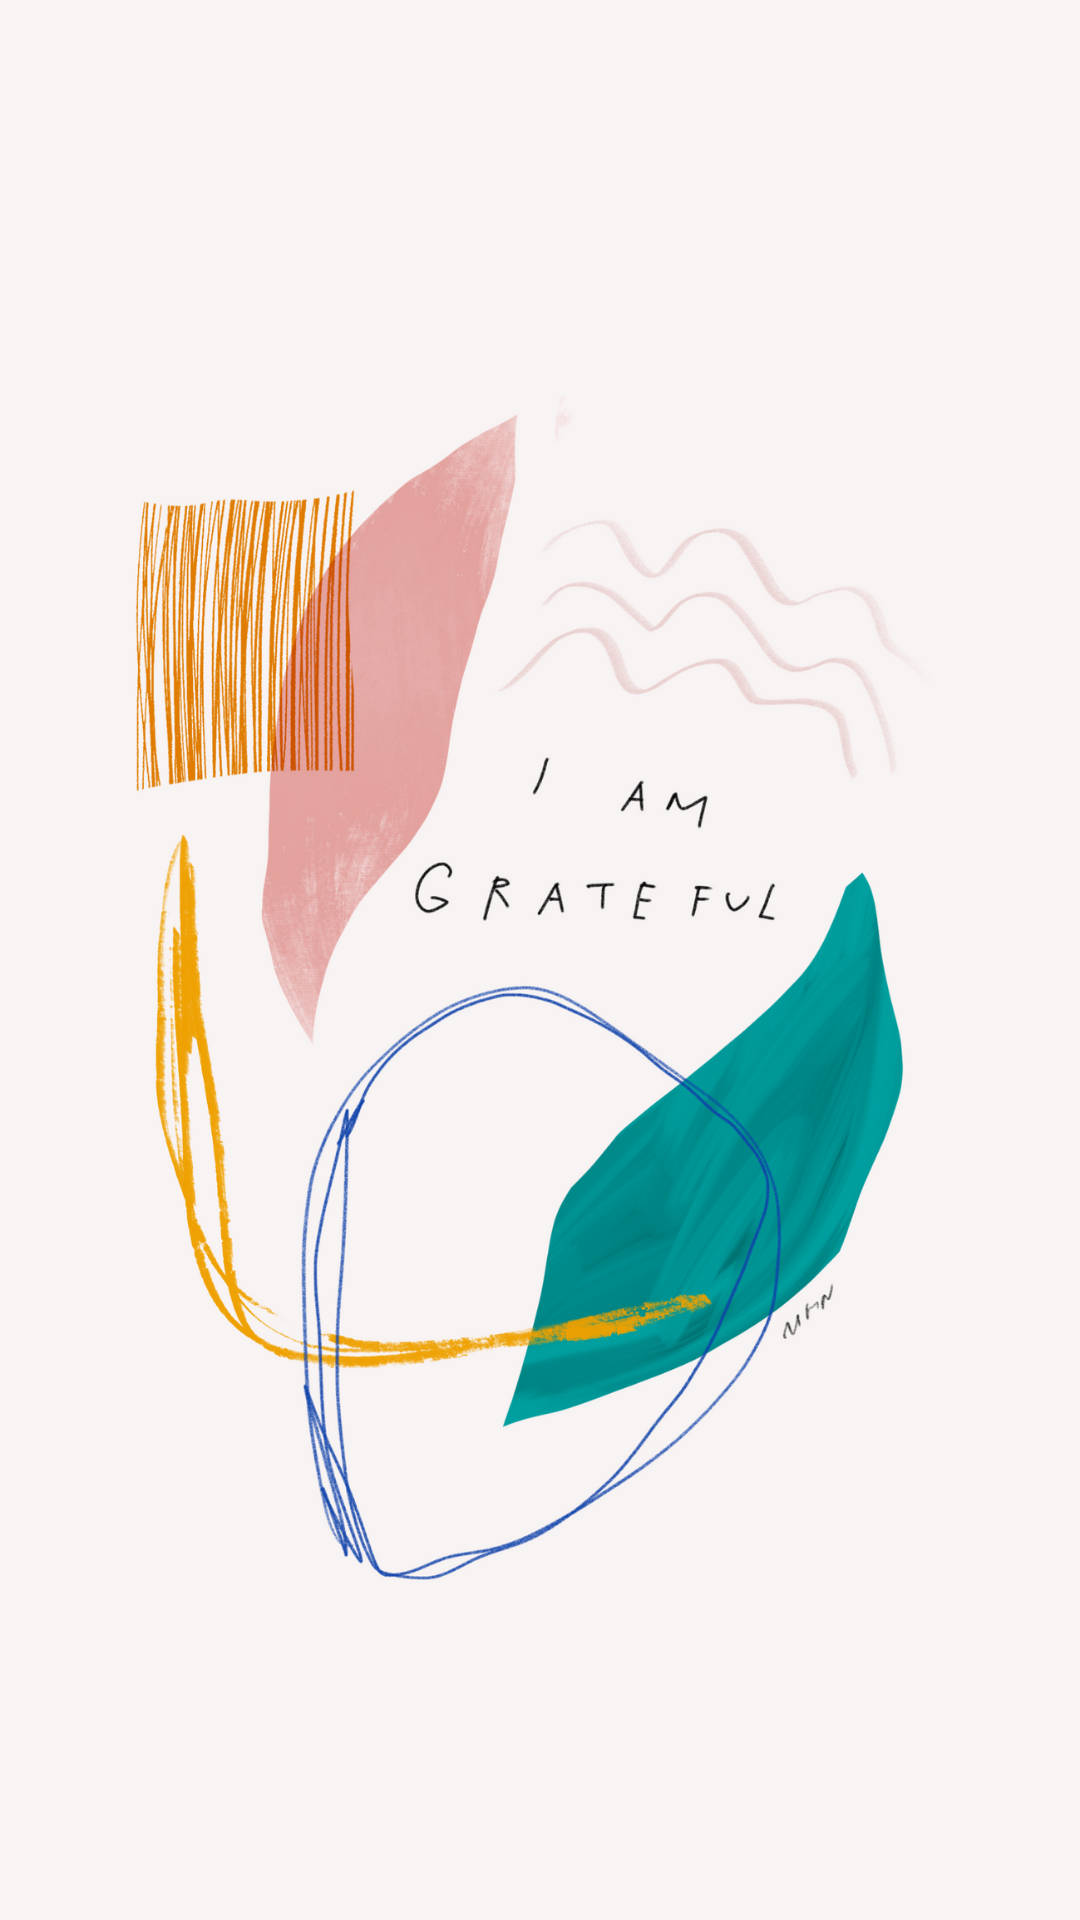 Aesthetic Grateful Affirmation Background